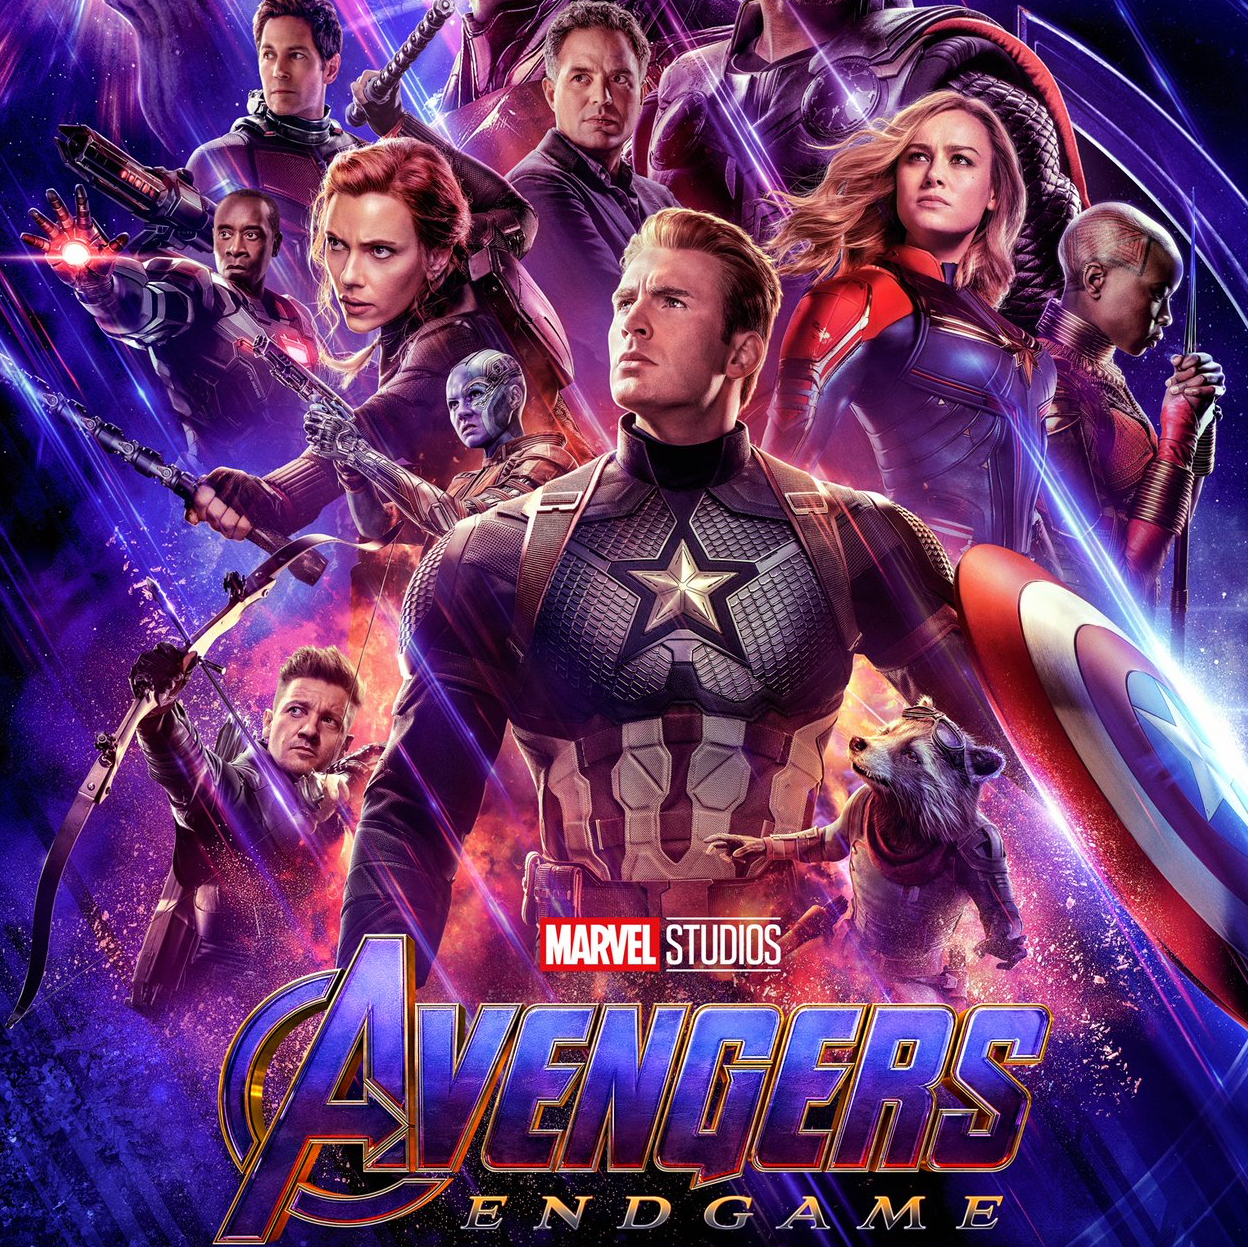 Marvel Studios' "Avengers: Endgame" with The Hit House's trailer music contribution.